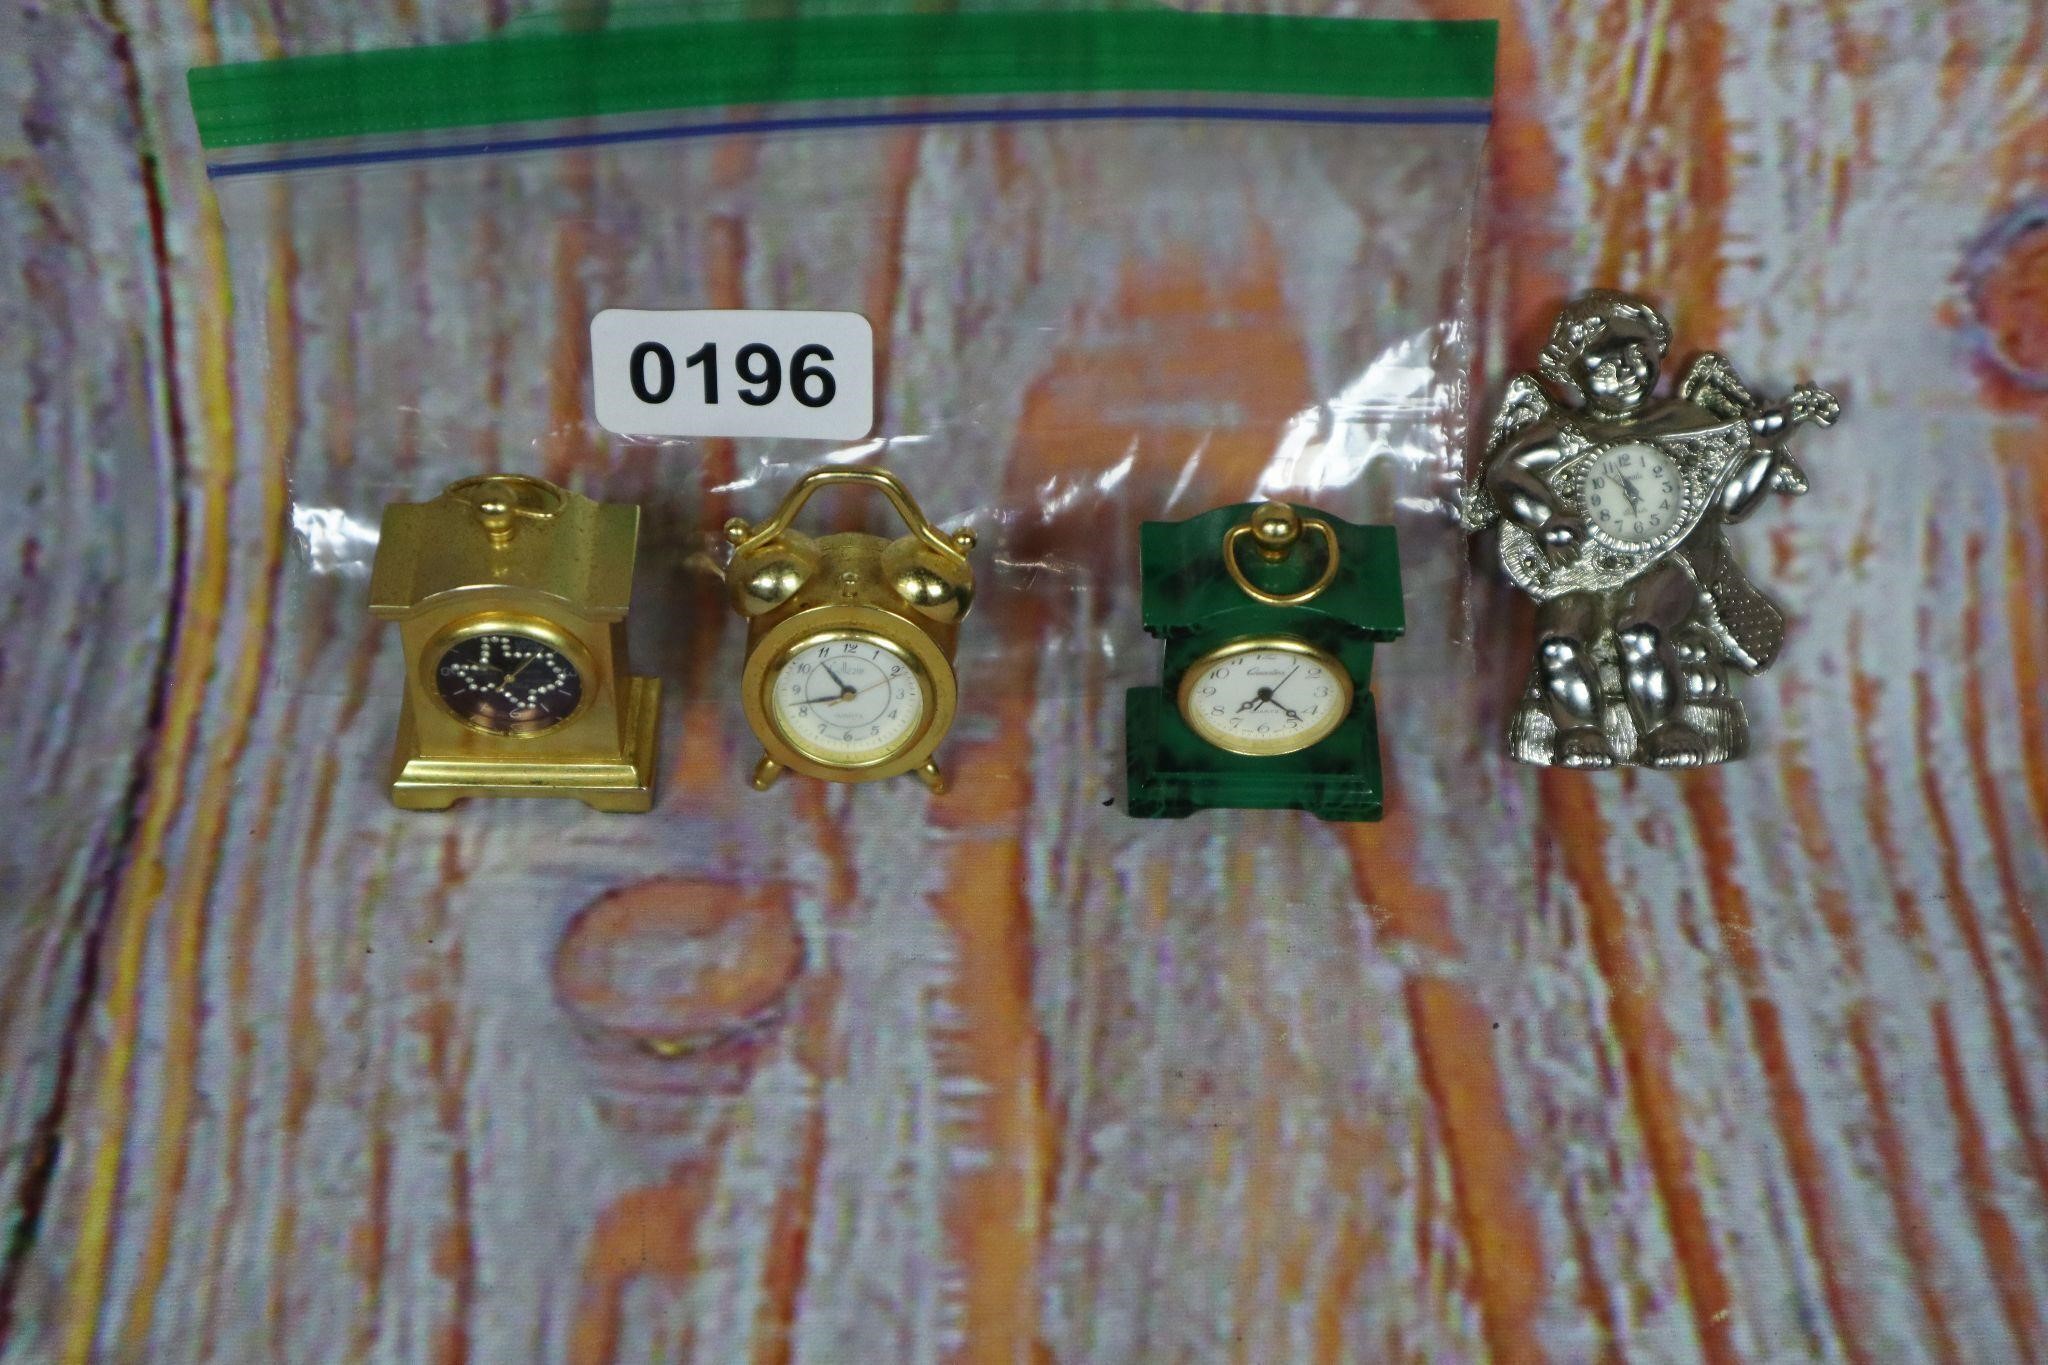 4 miniature Clocks may need batteries